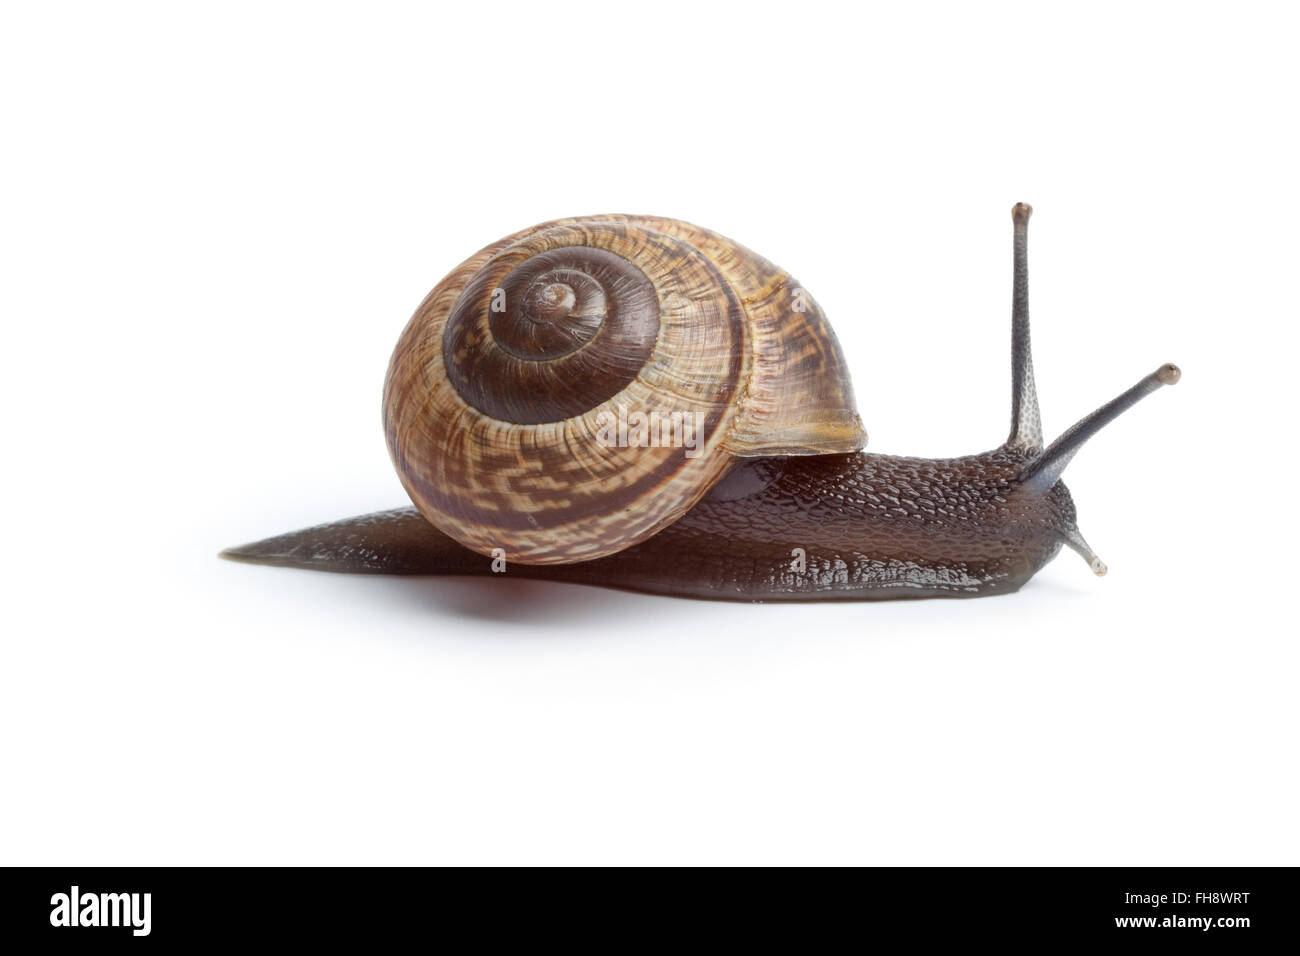 Garden snail isolated on white background Stock Photo